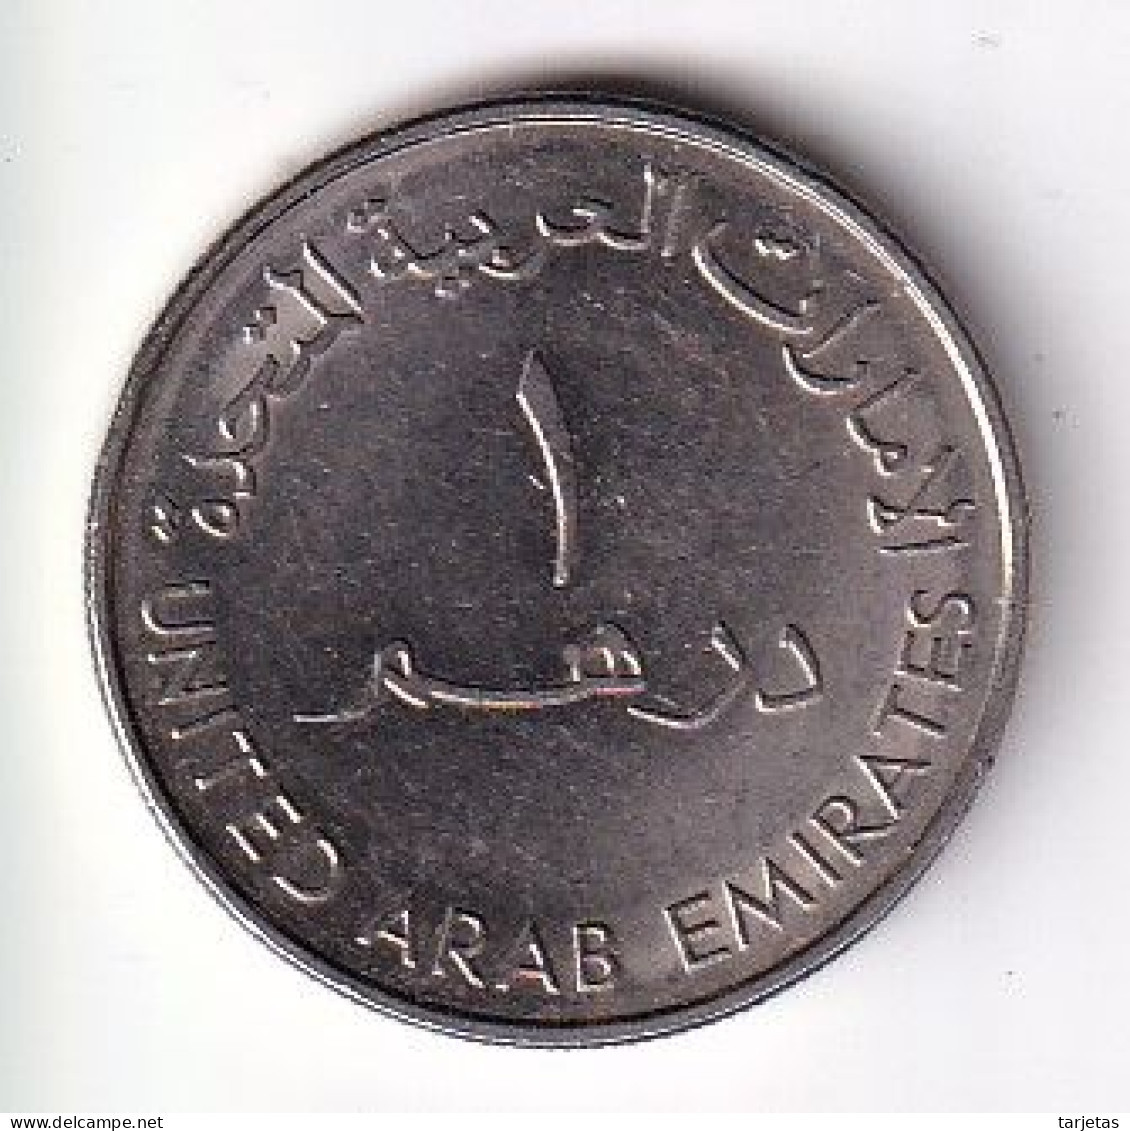 MONEDA DE EMIRATOS ARABES DE 1 DIRHAM DEL AÑO 2007 THE GOLDEN JUBILEE OF ABU DHABI POLICE (COIN) - United Arab Emirates